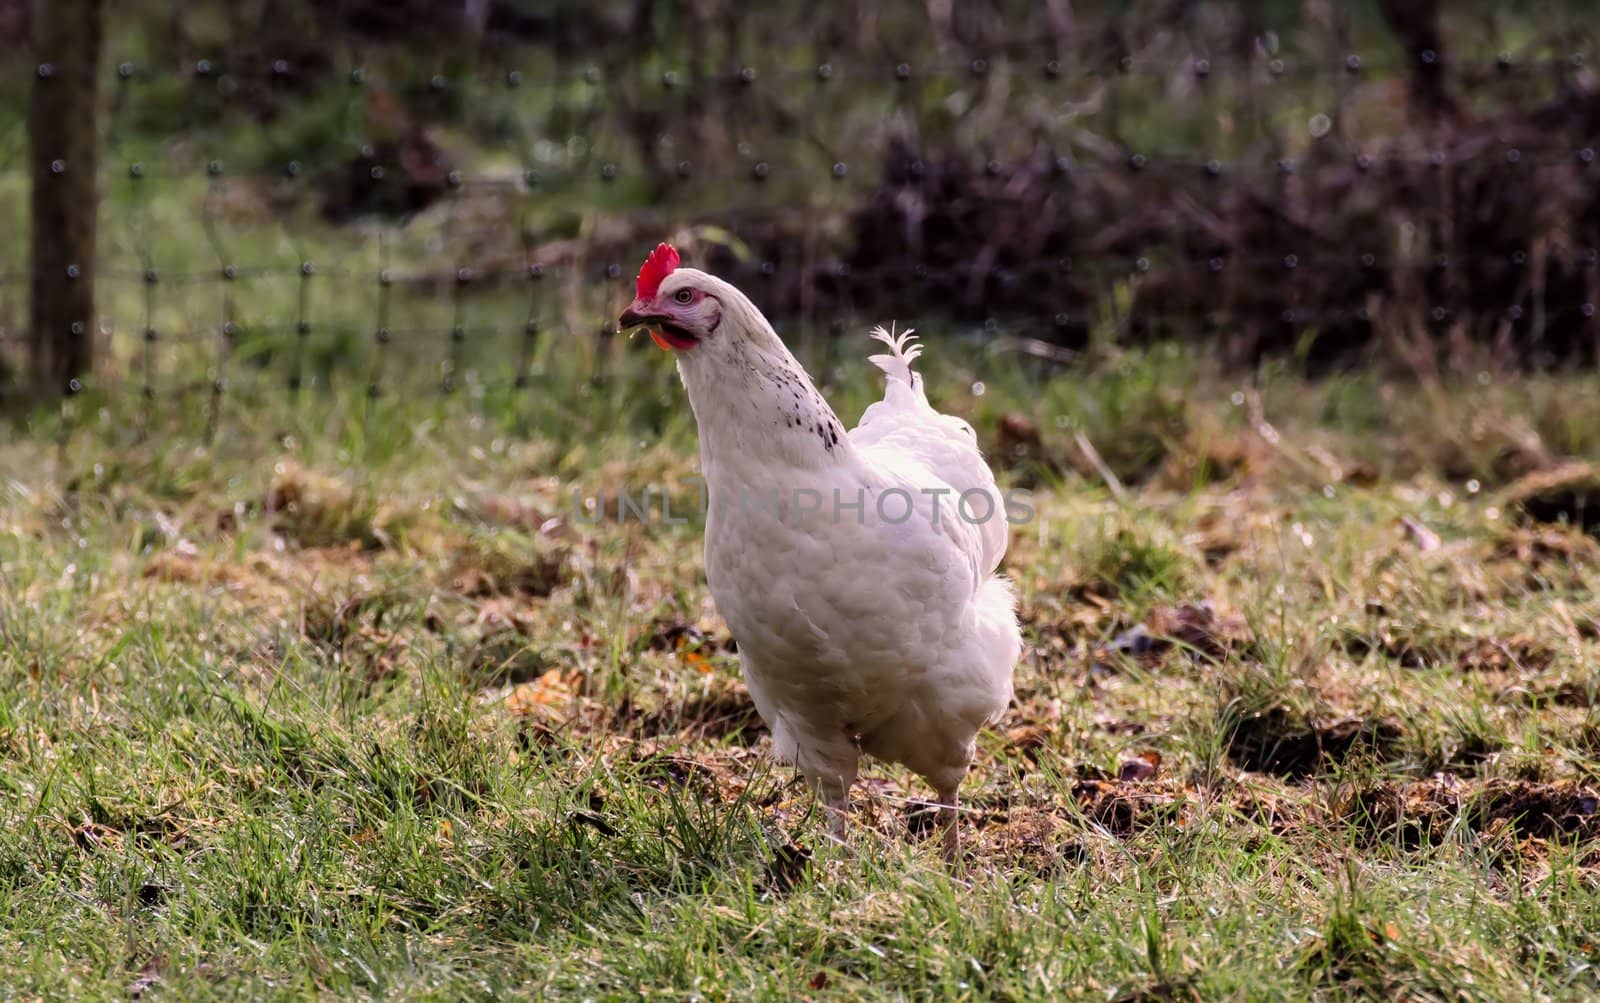 Free range chicken roaming in grass outdoors